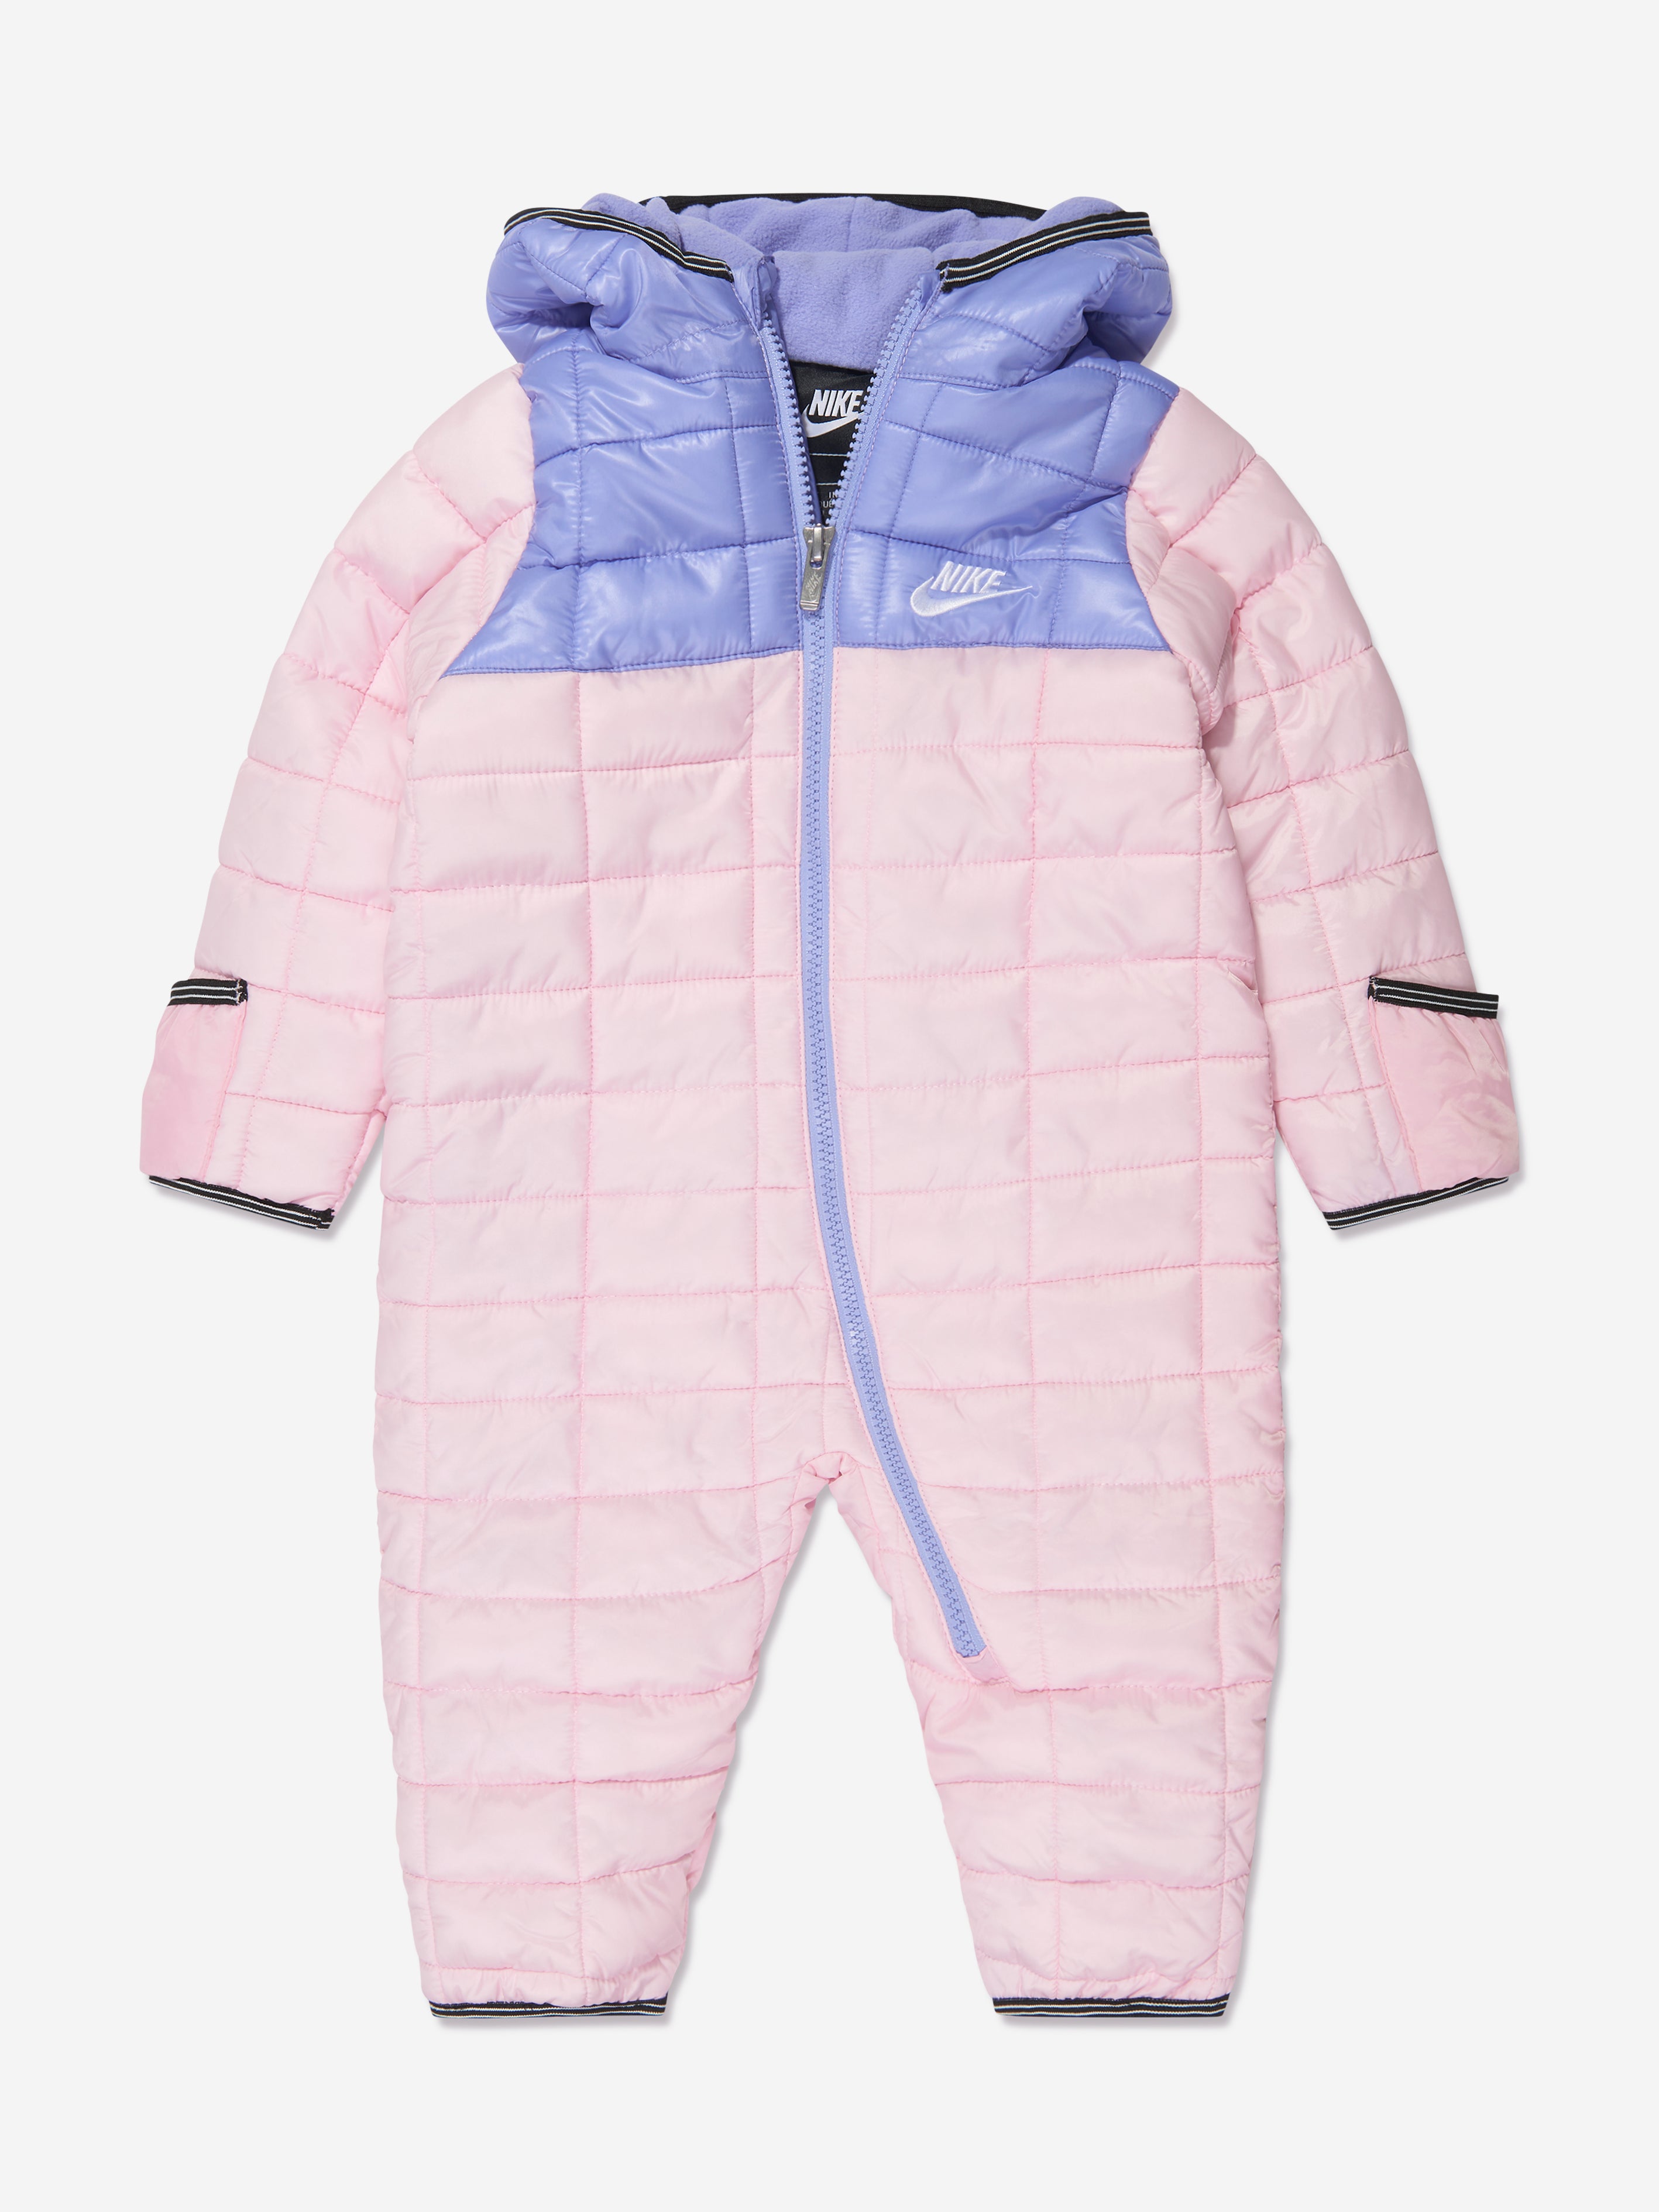 Clothing Colourblock | Pink Baby Childsplay Girls in Snowsuit